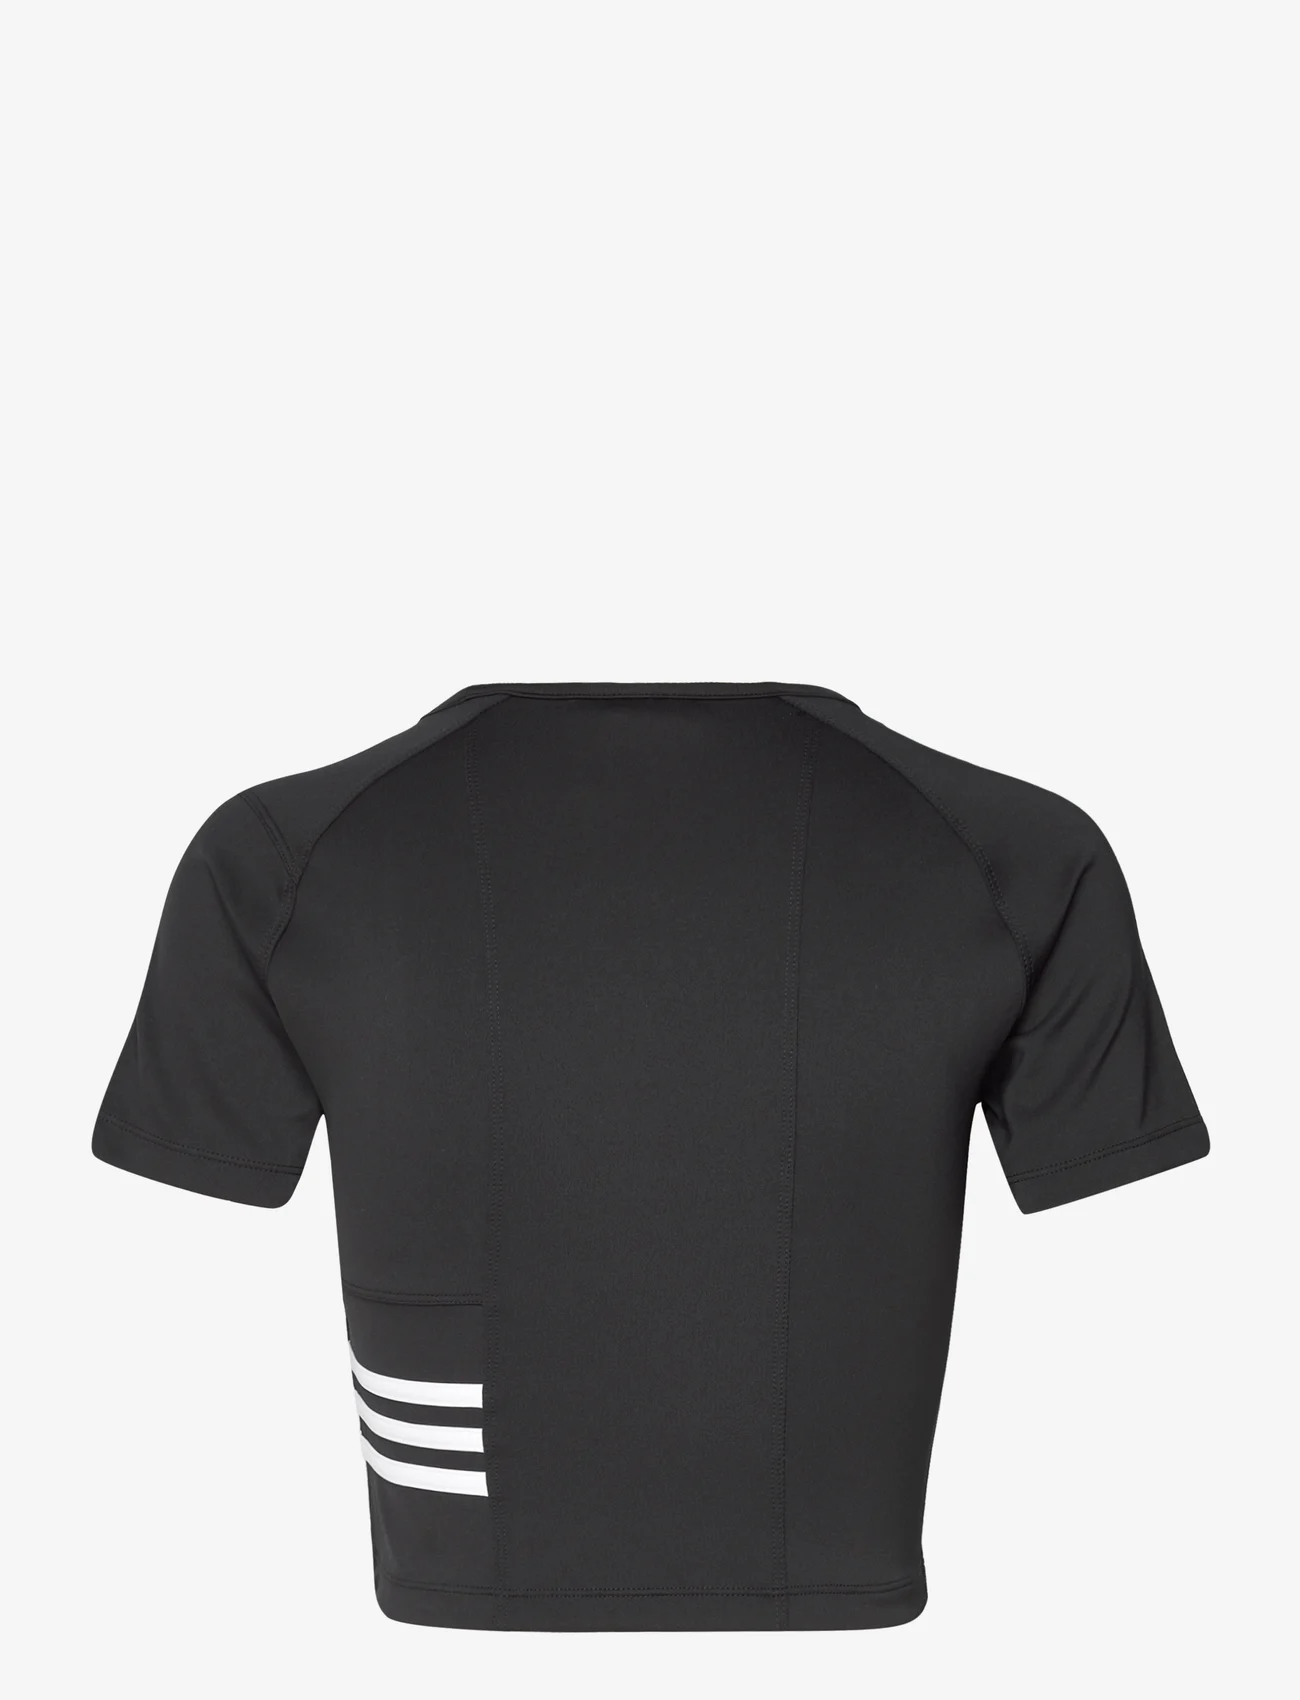 adidas Originals - T-Shirt - t-shirts - black - 1